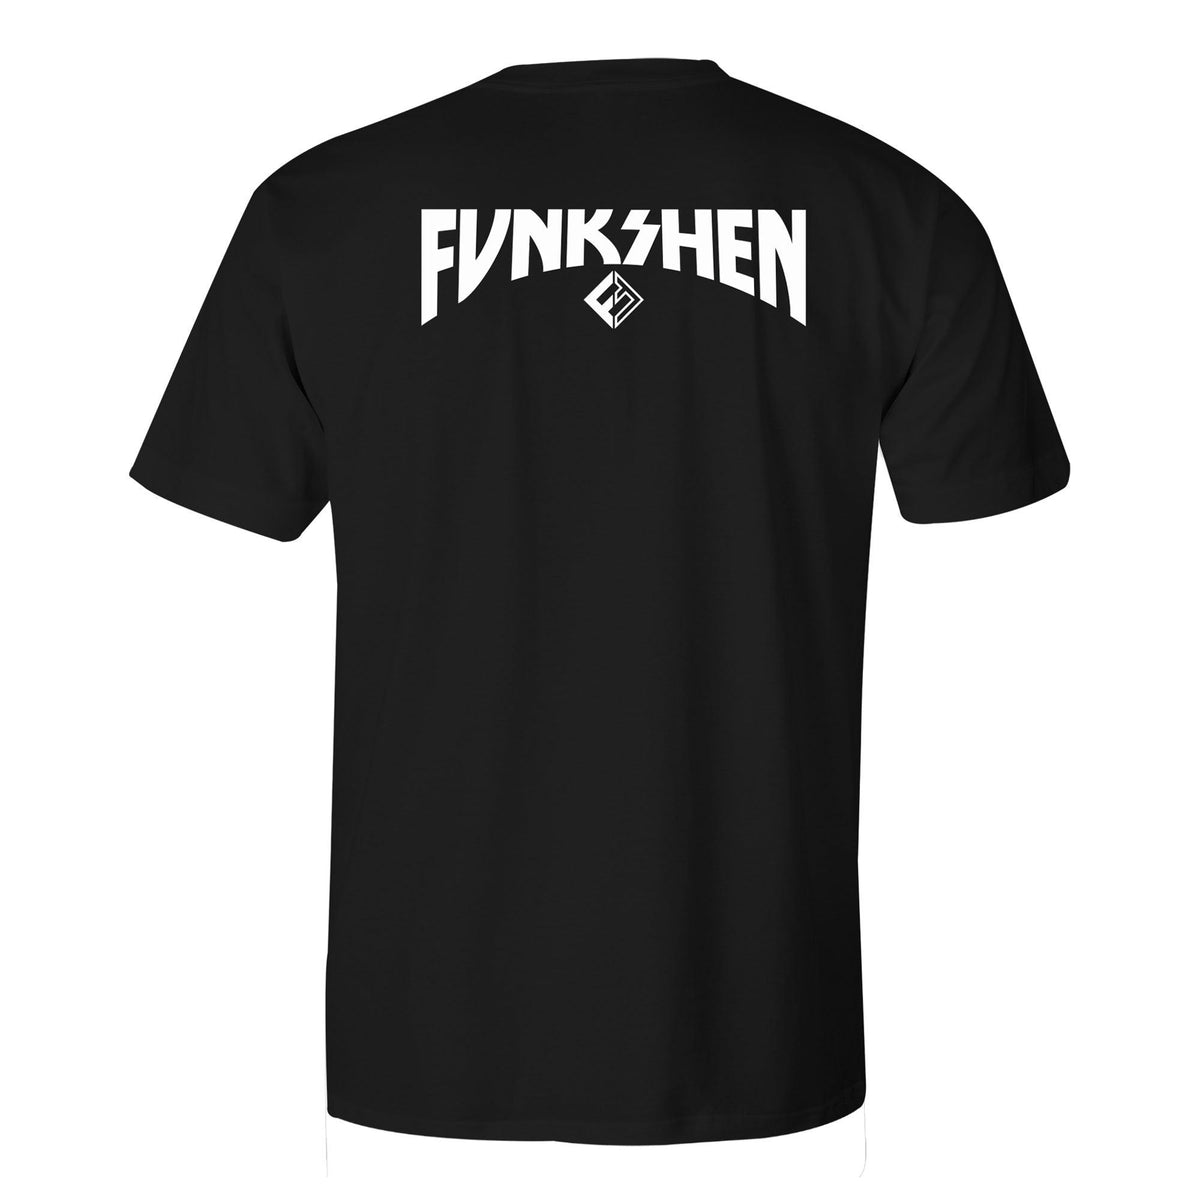 Funkshen KAOS T-Shirt - Black - Funkshen Bodyboards